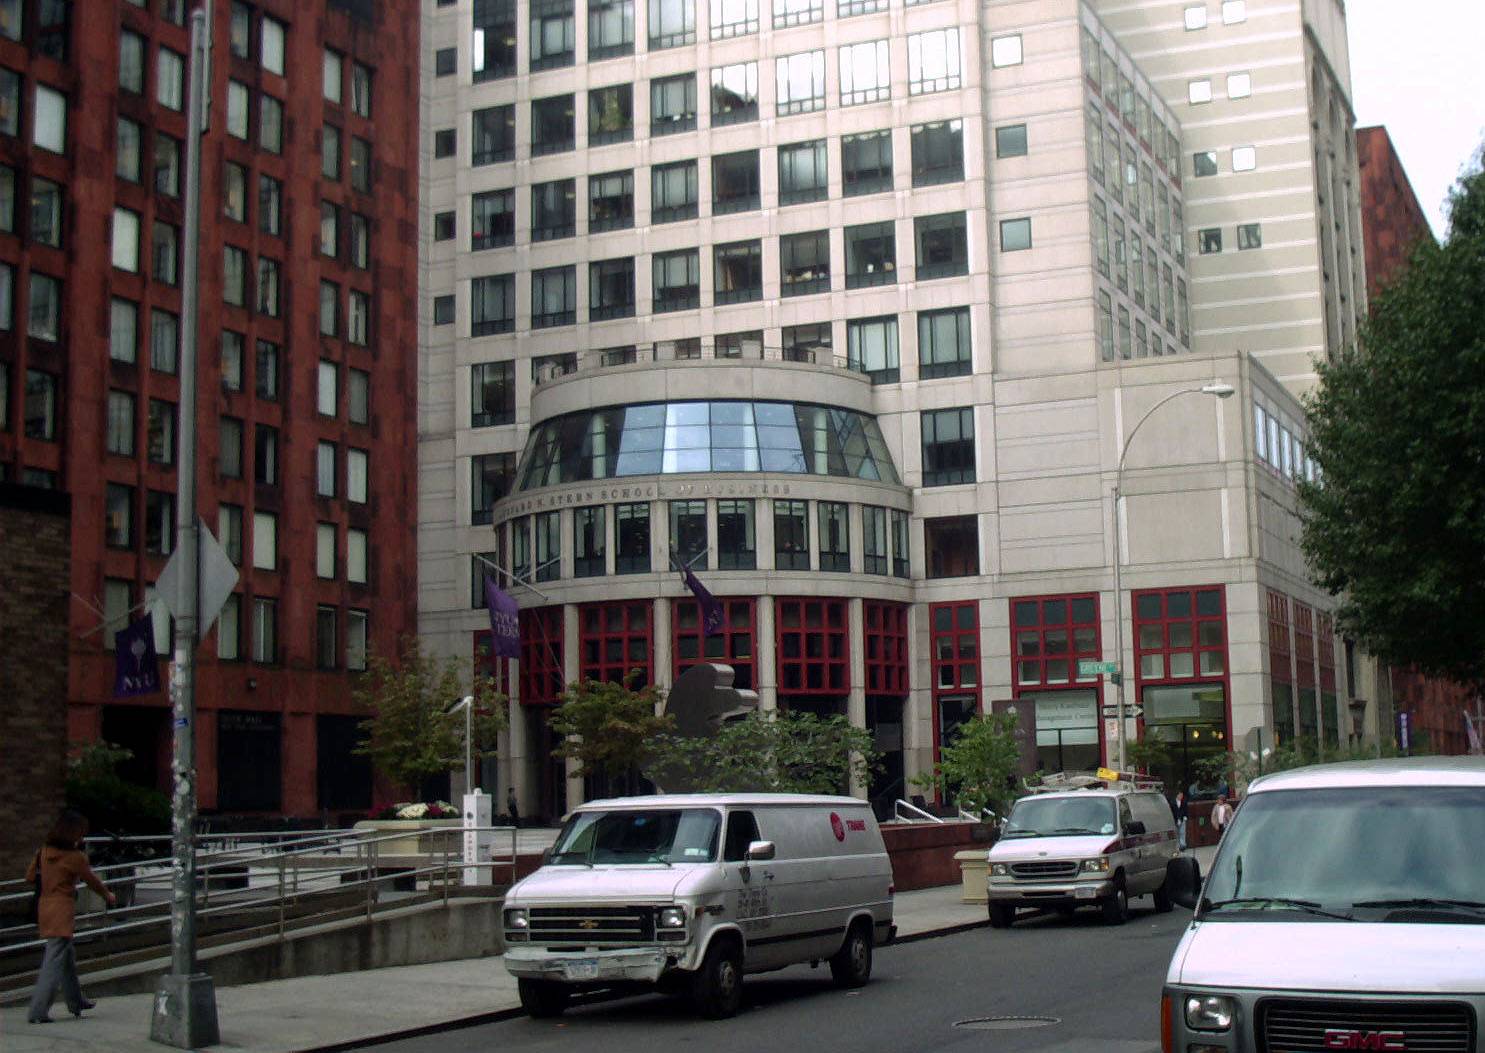 NYU Stern Business School from Mercer Street